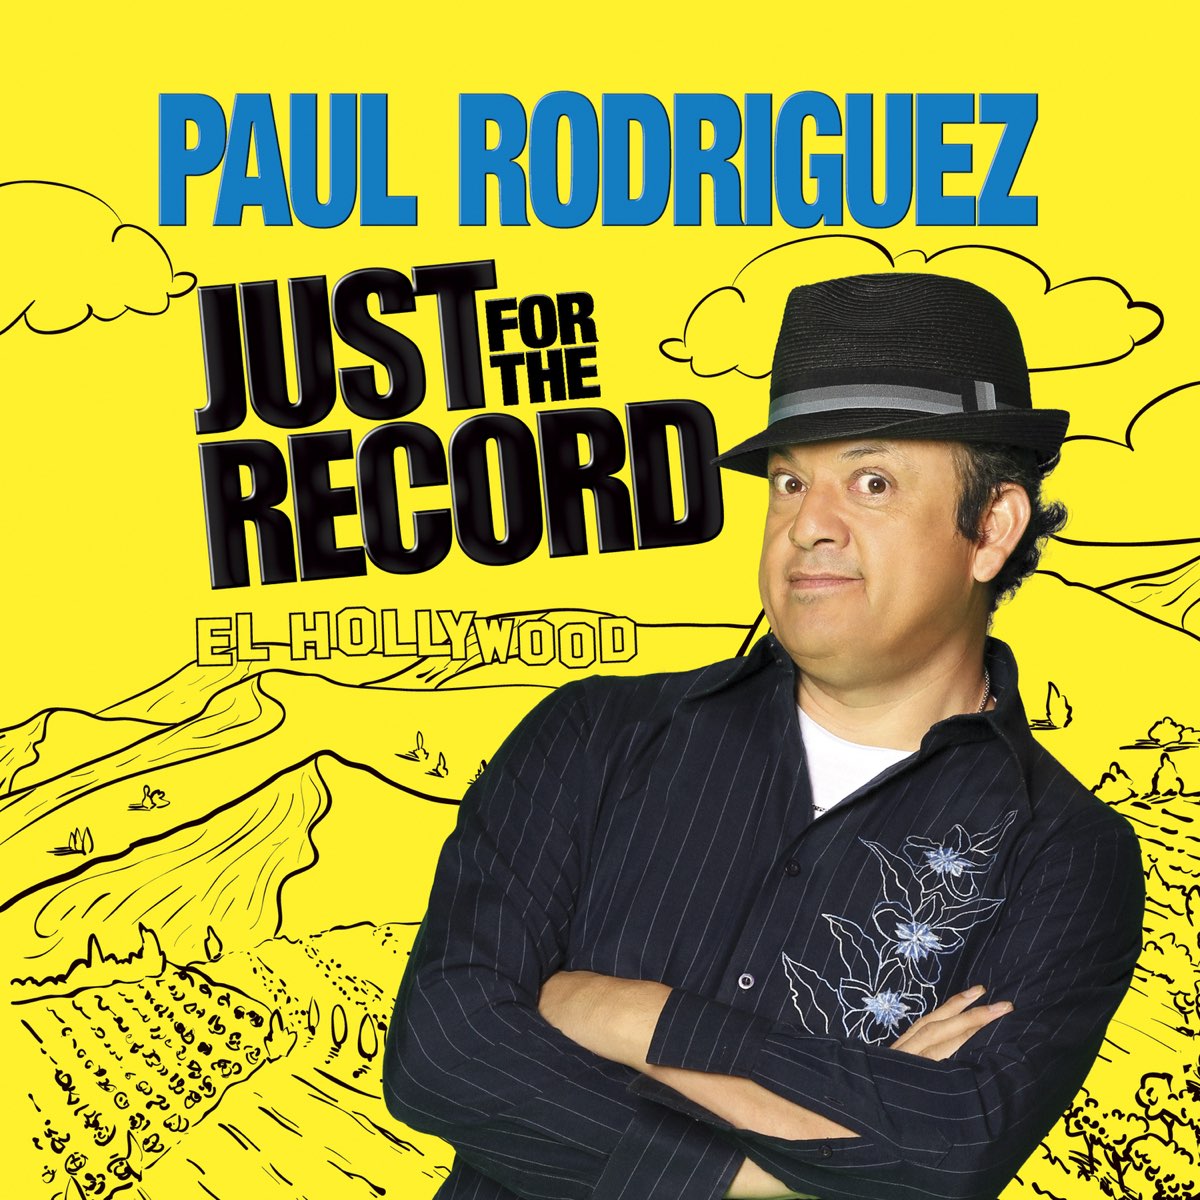 Paul records. Paul Rodriguez. Paul Rodriguez comedian. Just for the record. Родригез рекорд прочтения рэпа.